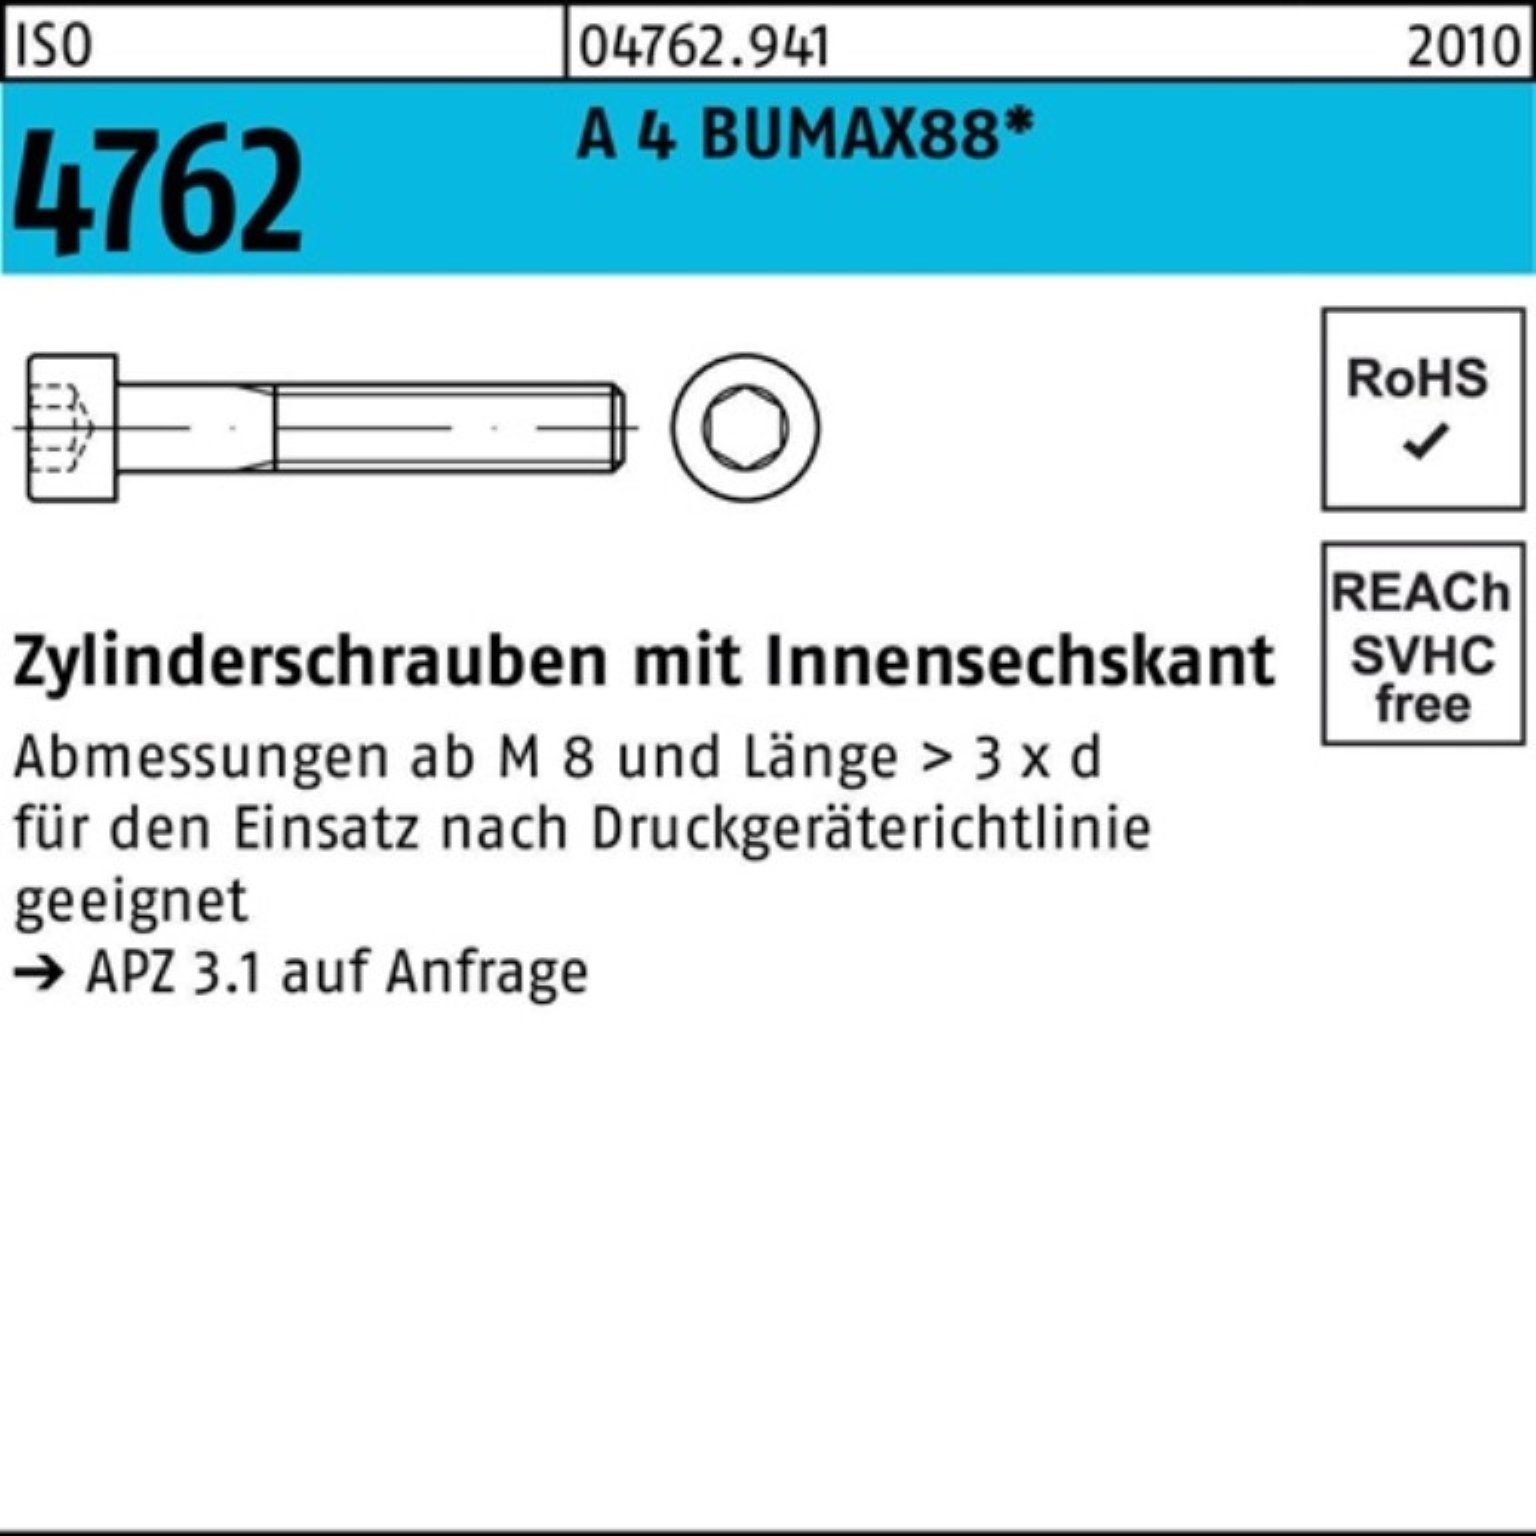 Bufab Zylinderschraube 100er Pack 100 M5x 25 Innen-6kt ISO Zylinderschraube 4762 BUMAX88 A 4